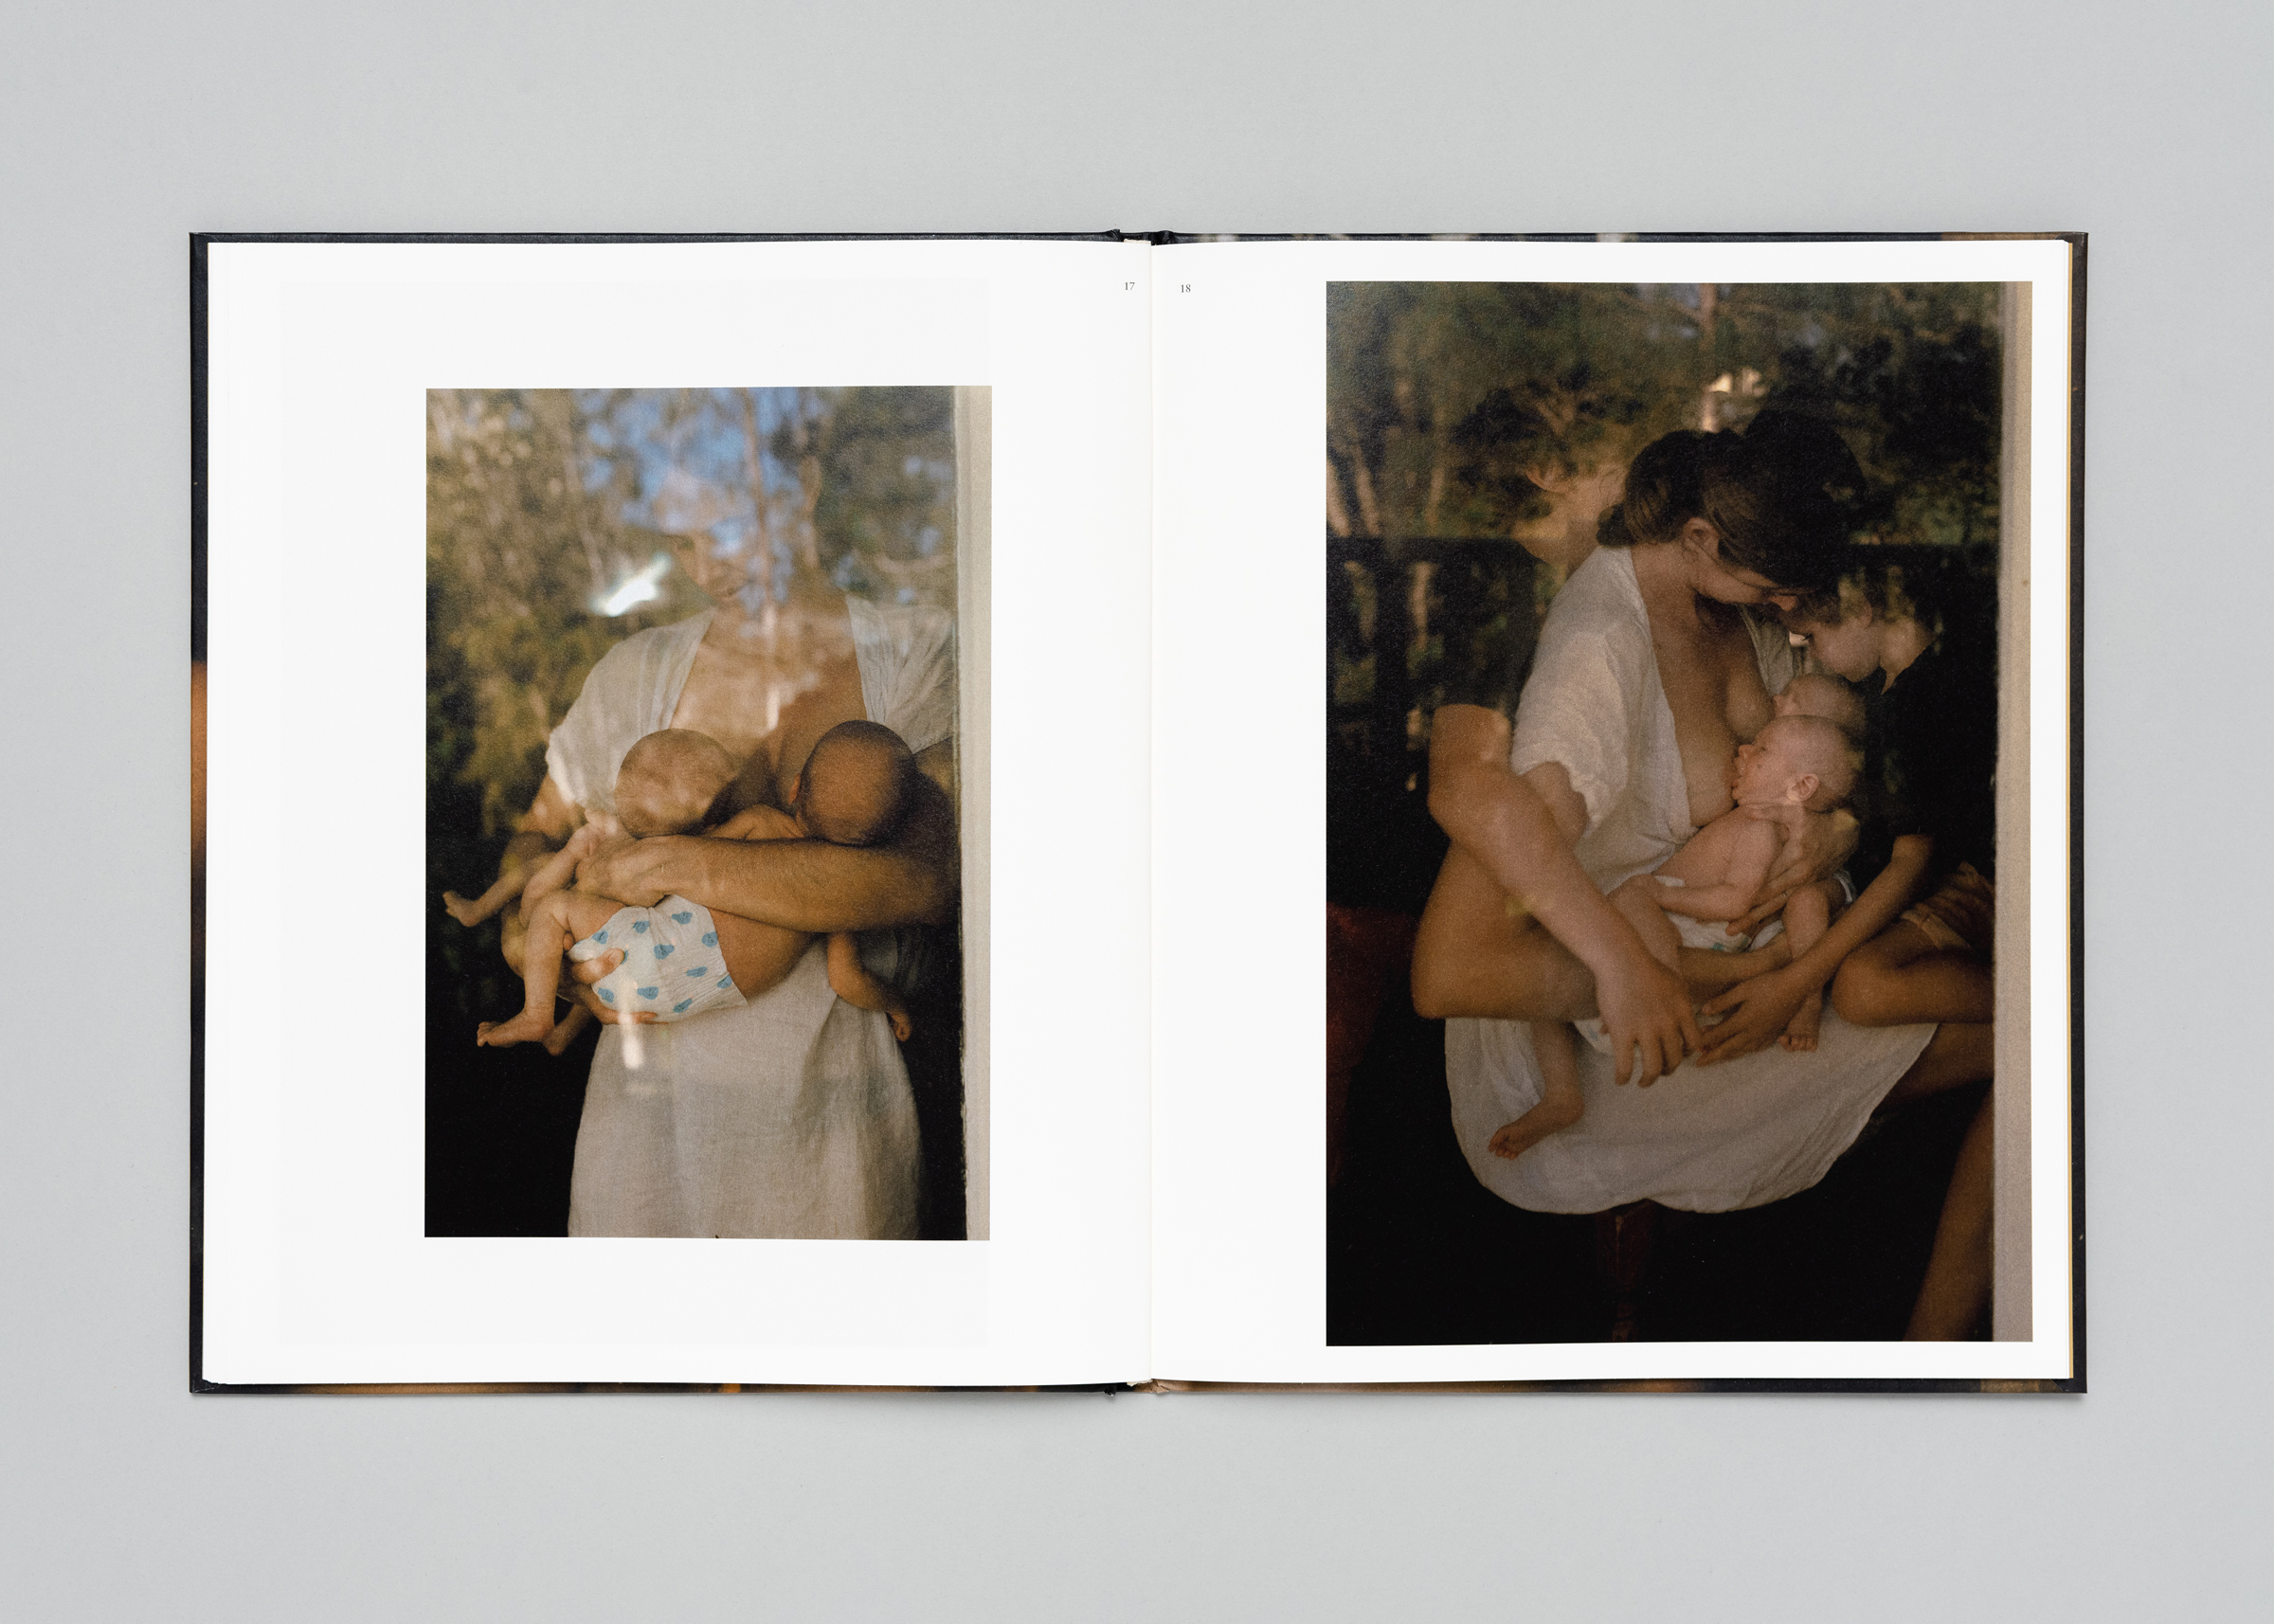 Lisa Sorgini — Behind Glass — Book